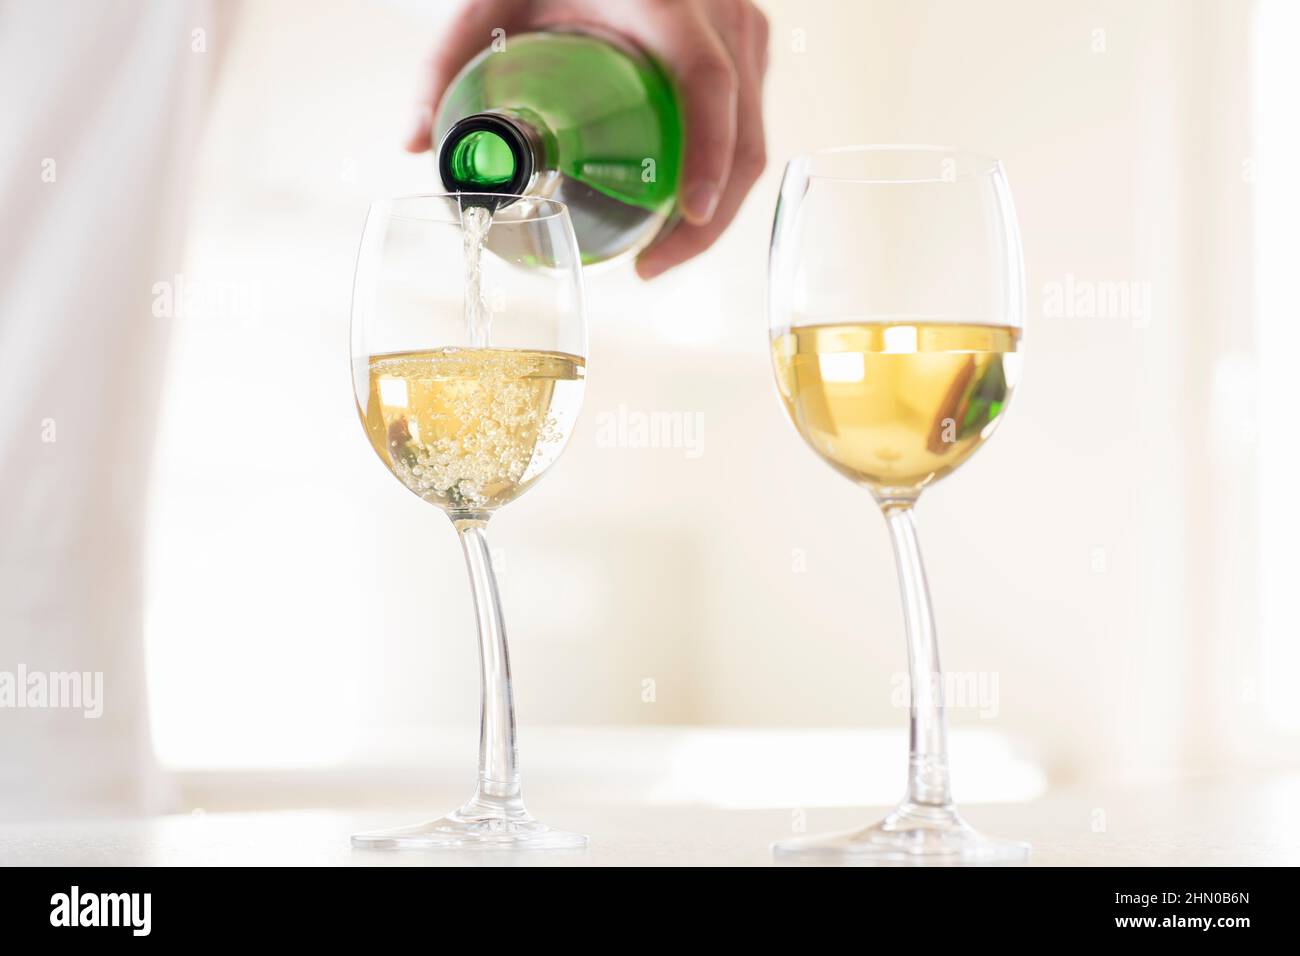 Pouring white wine into a wineglass in a white kitchen Stock Photo